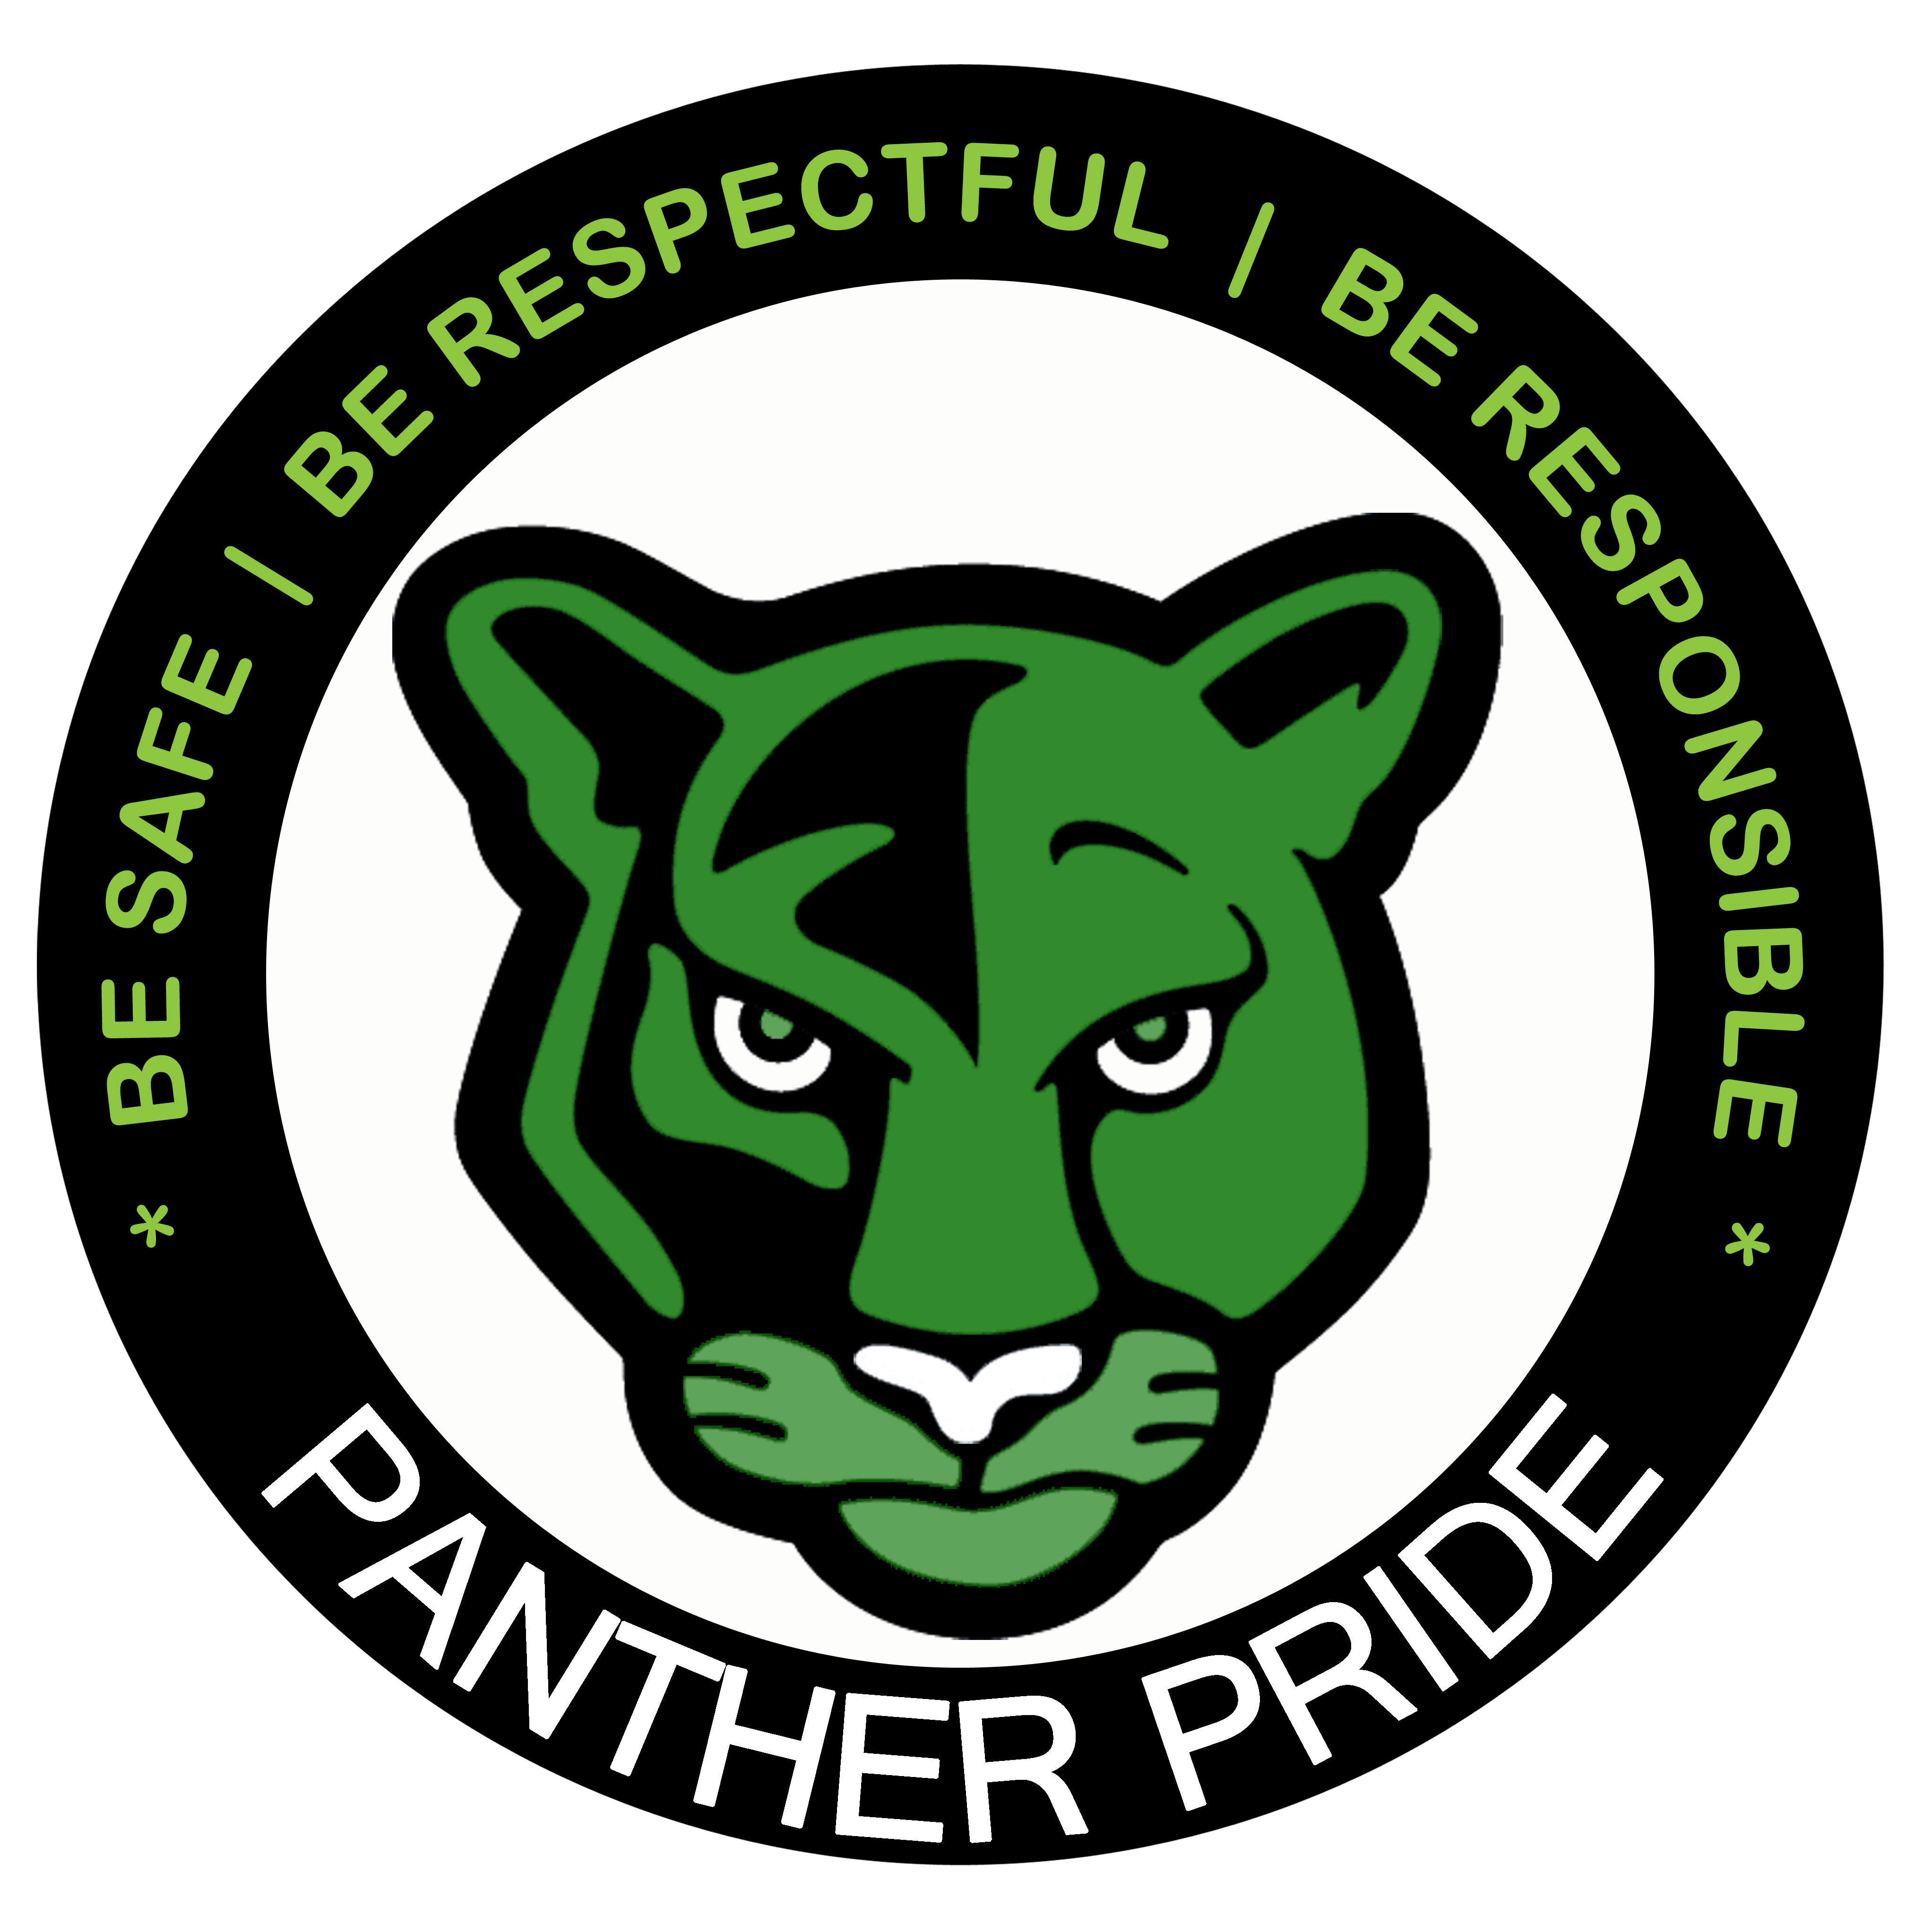 panther clipart logo